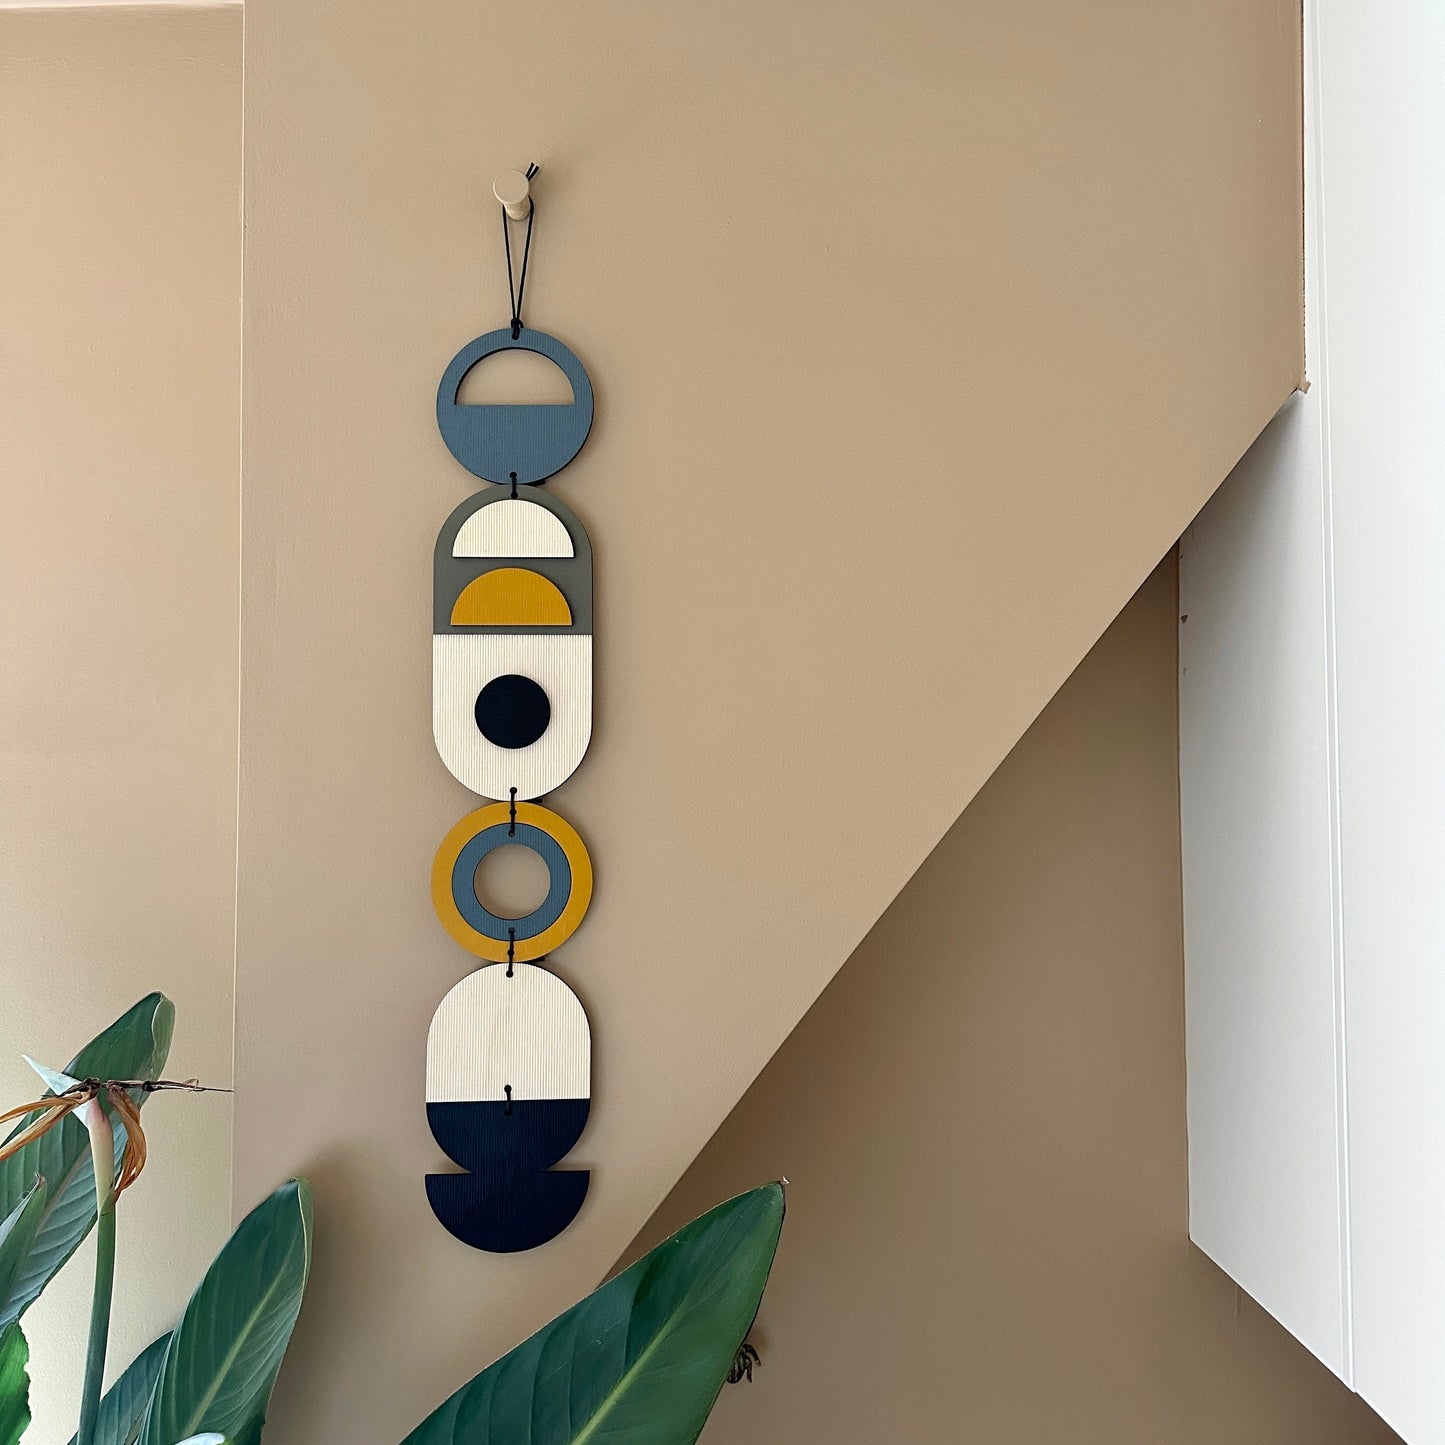 Wall Hanging Gift - Geometric Wall Art - Home Gift for Him - Housewarming Present - Mid-Century Home Decor - Art Gifting - Birthday Present